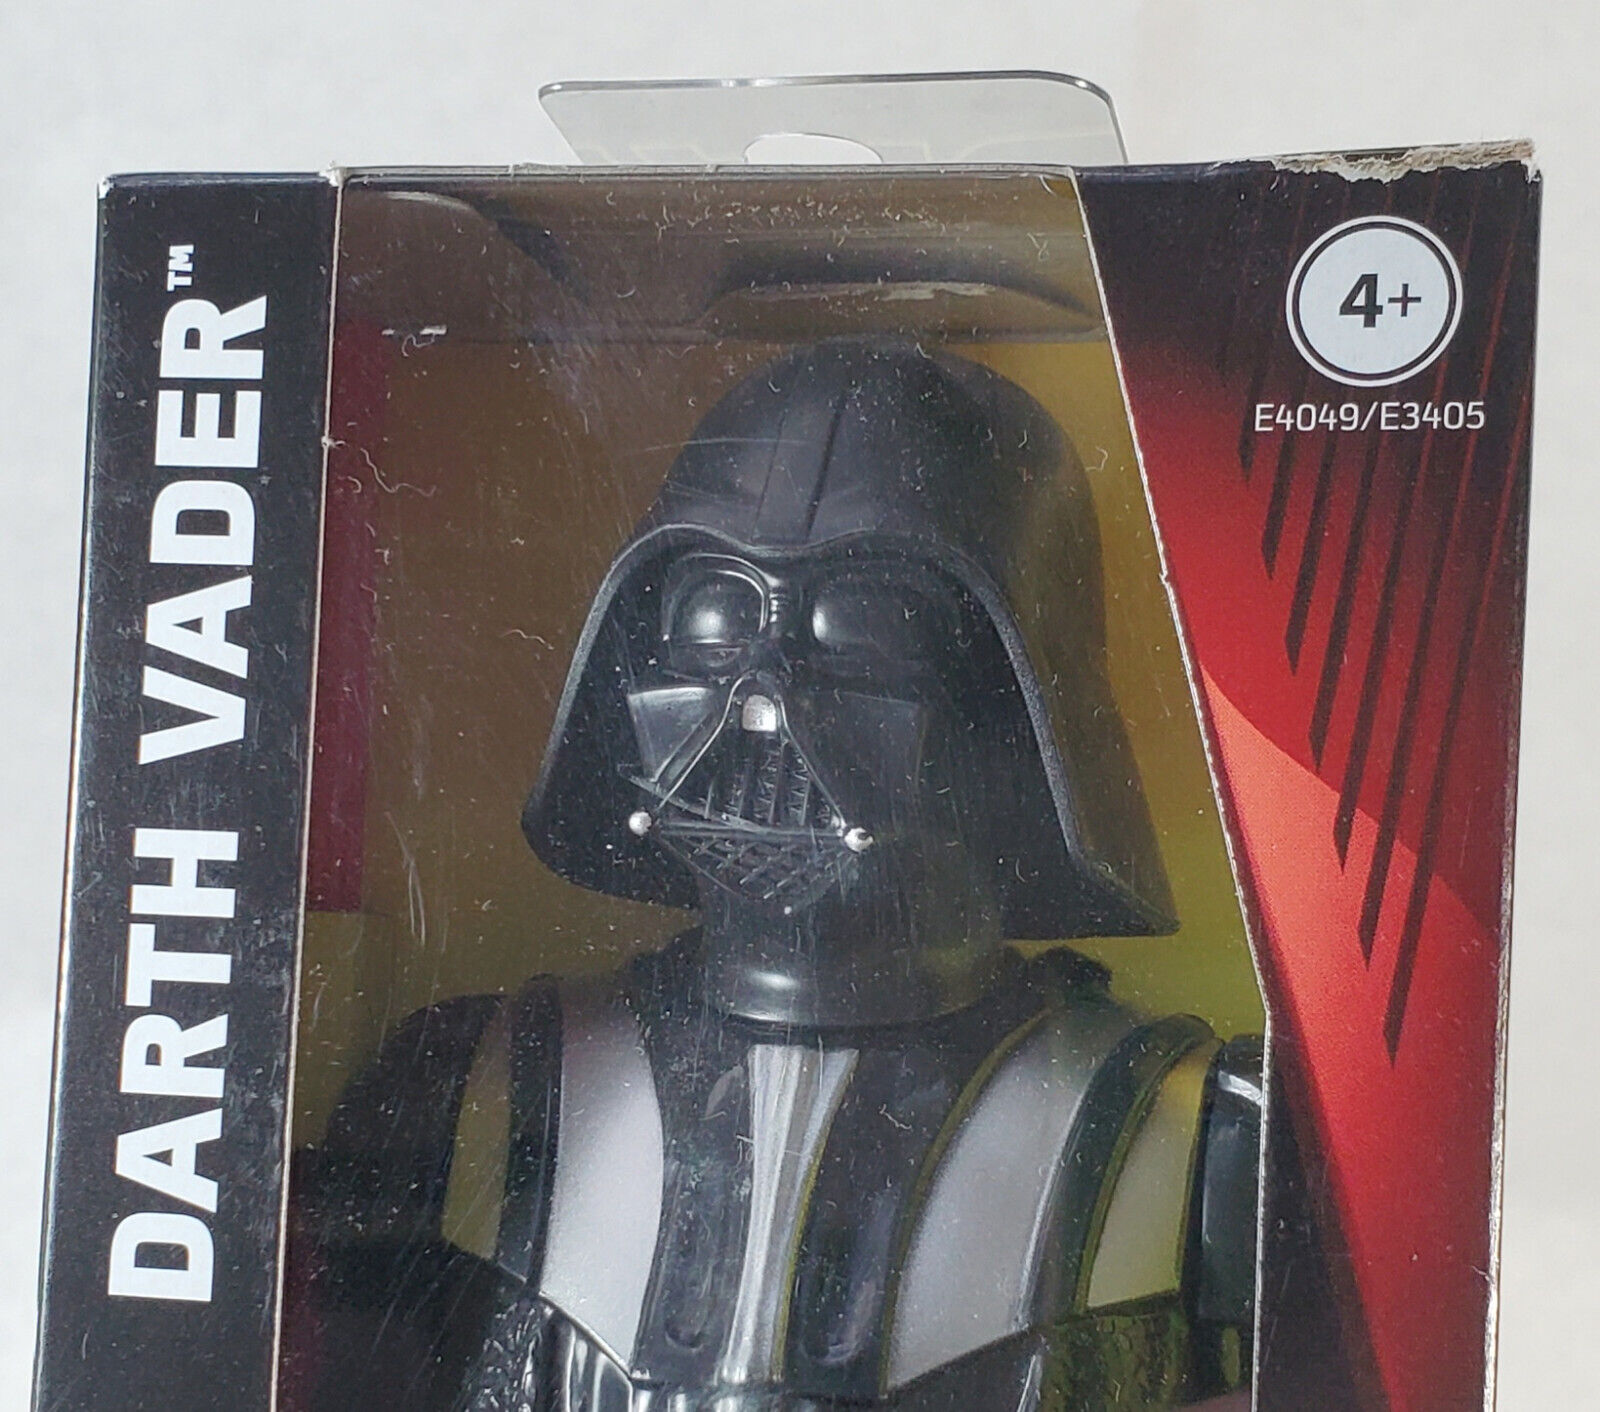 Star Wars Revenge Of The Sith - Darth Vader Hasbro 12-inch Action Figure Toy Hasbro E4049 - фотография #3